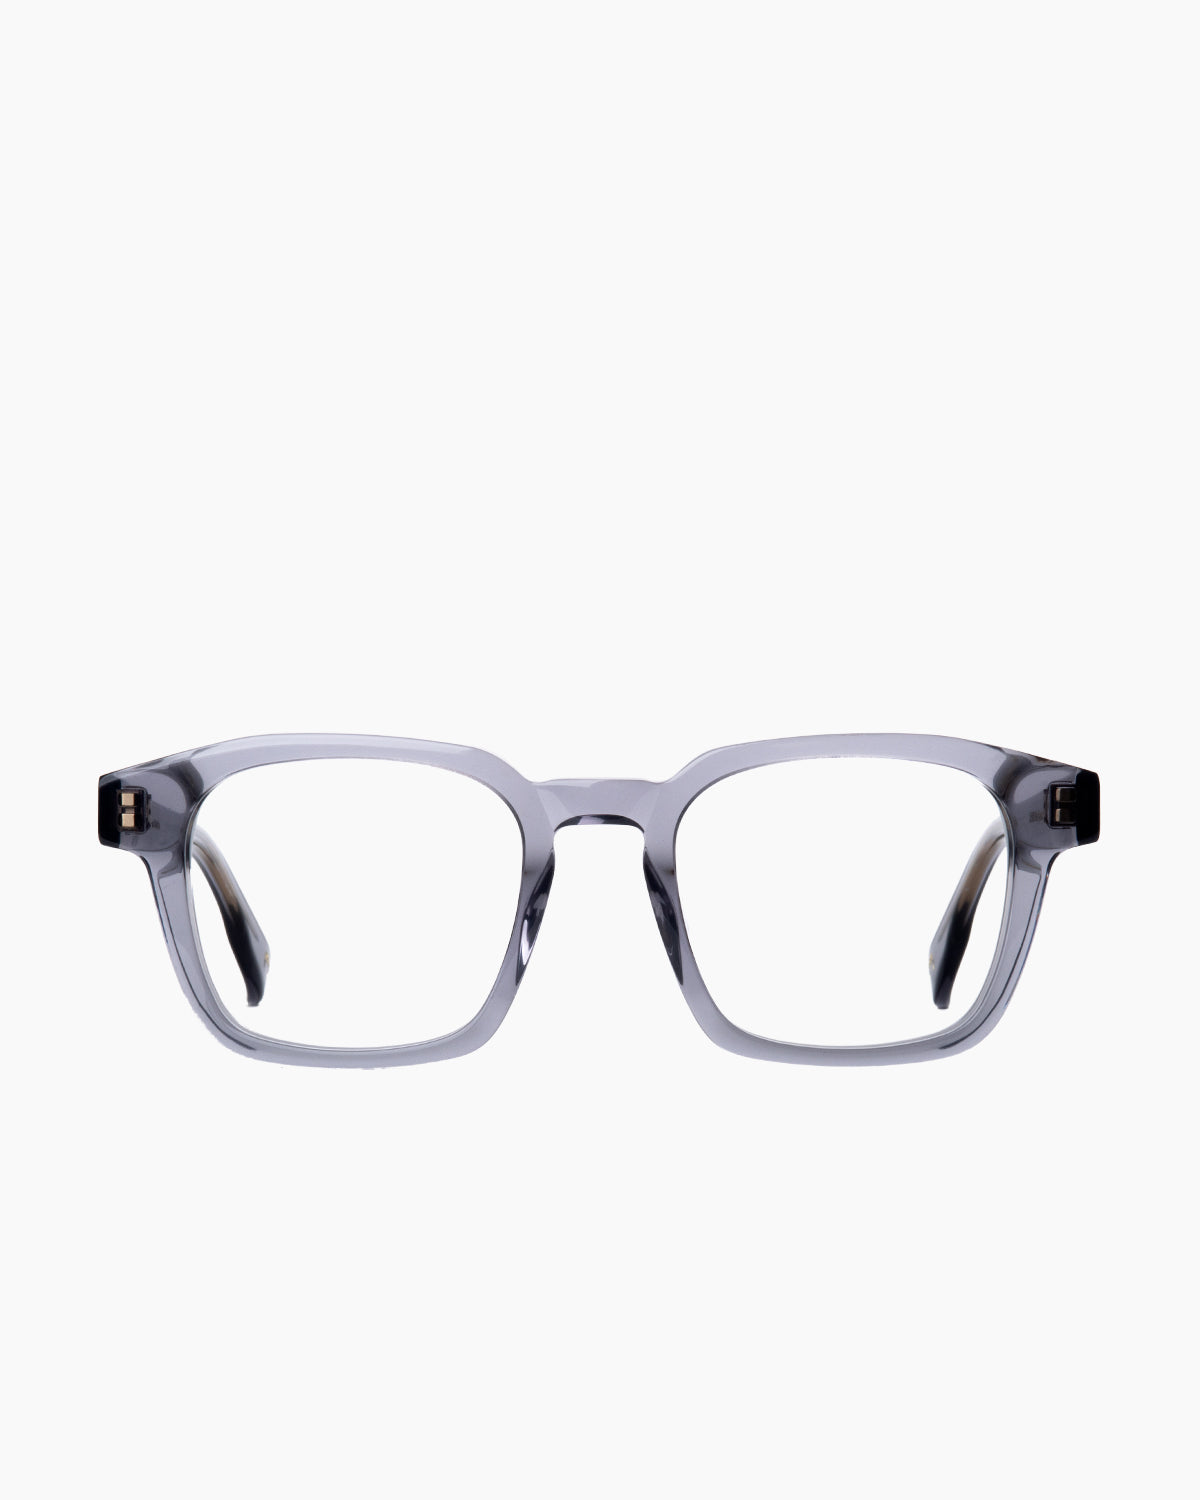 Spectacleeyeworks - yolanta - c731 | Bar à lunettes:  Marie-Sophie Dion